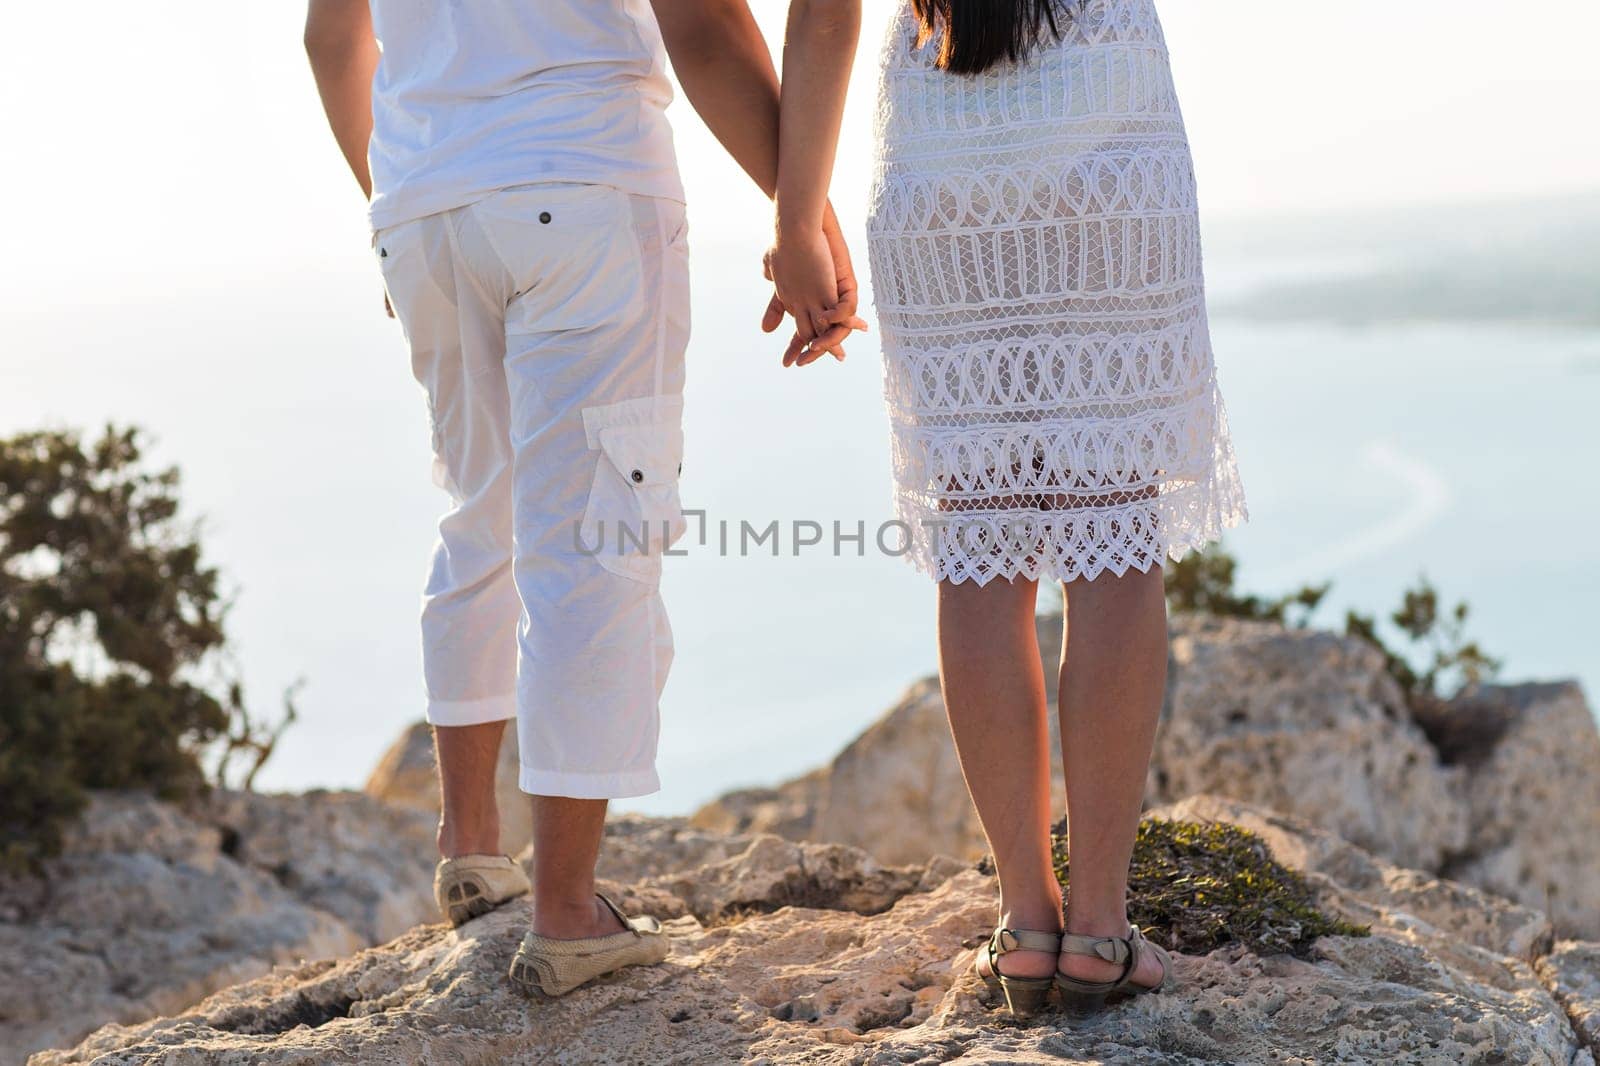 Honeymoon couple romantic in love at beach by Satura86